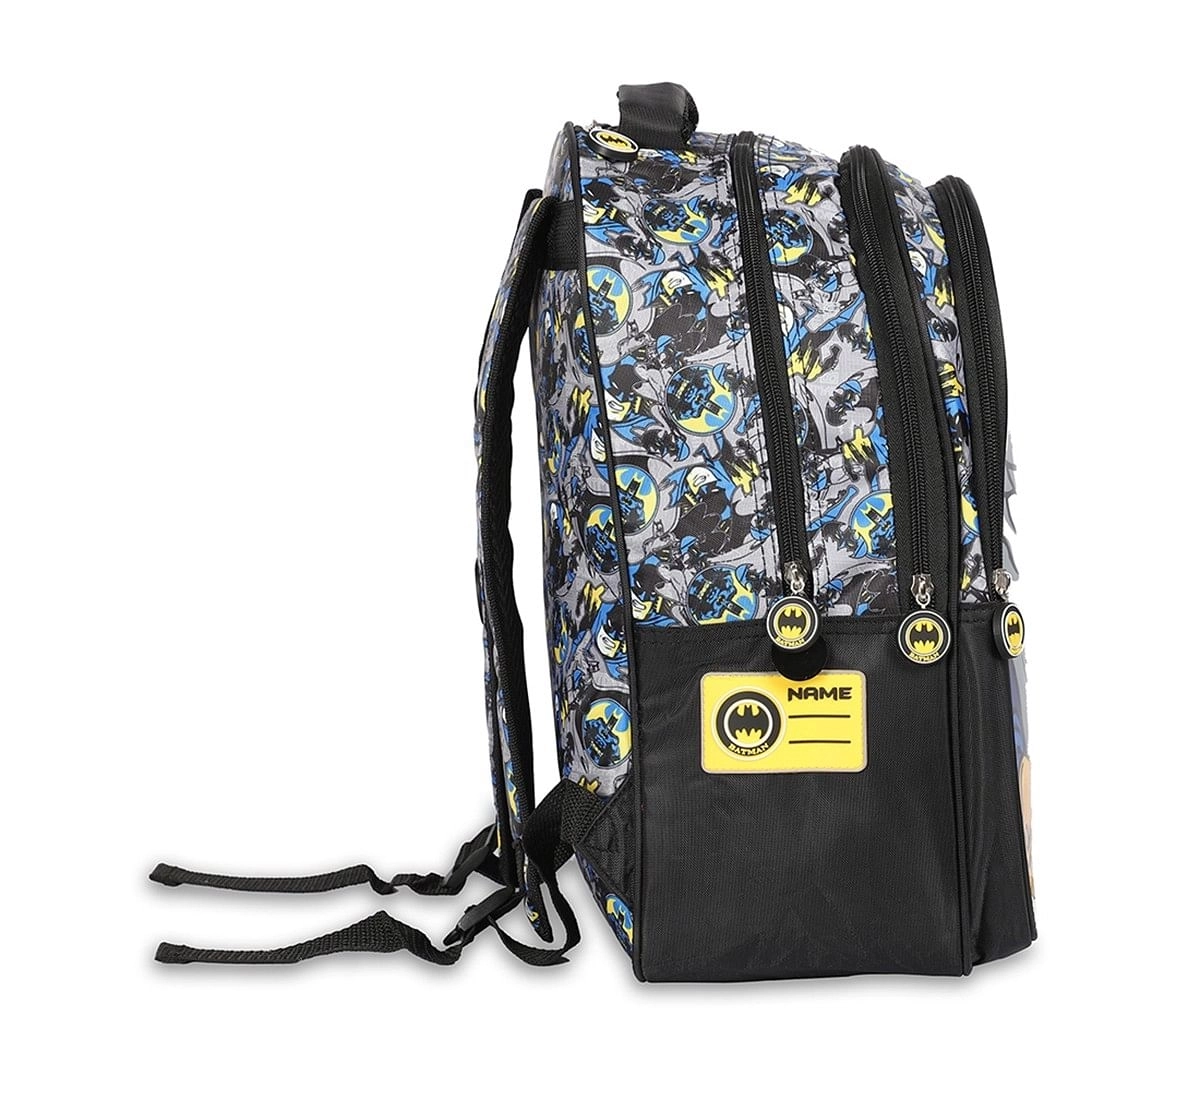 Dc Batman Hood School Bag 41 Cm Bags for age 7Y+ 